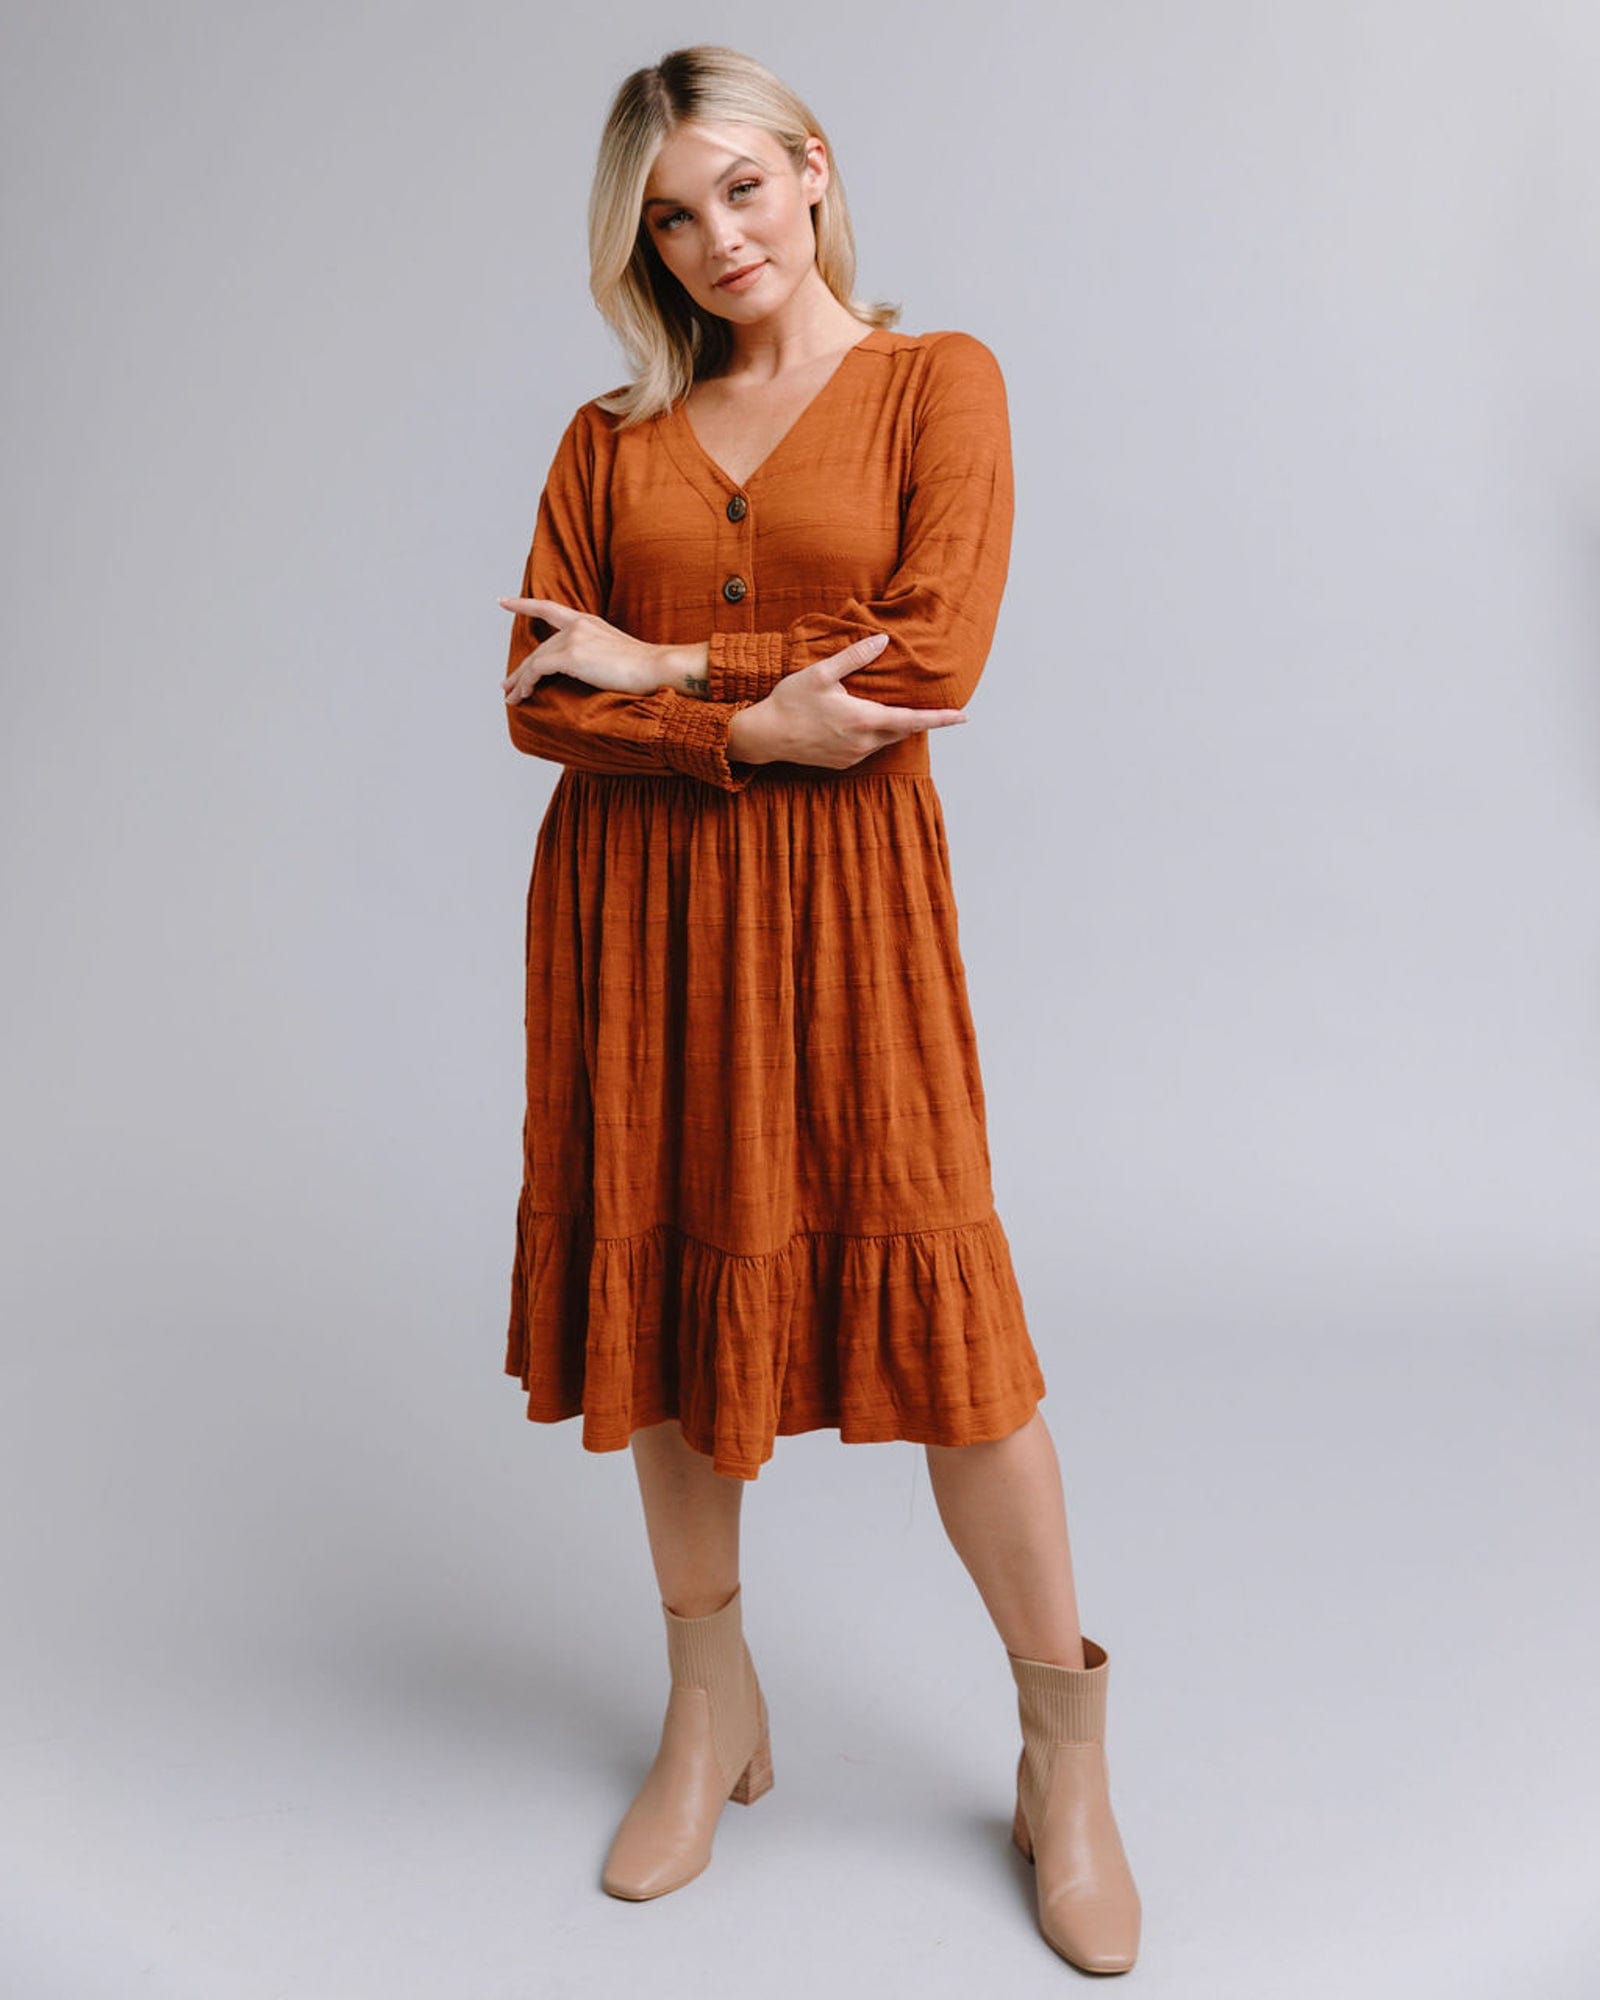 Woman in a long sleeve, button-down, orange dress